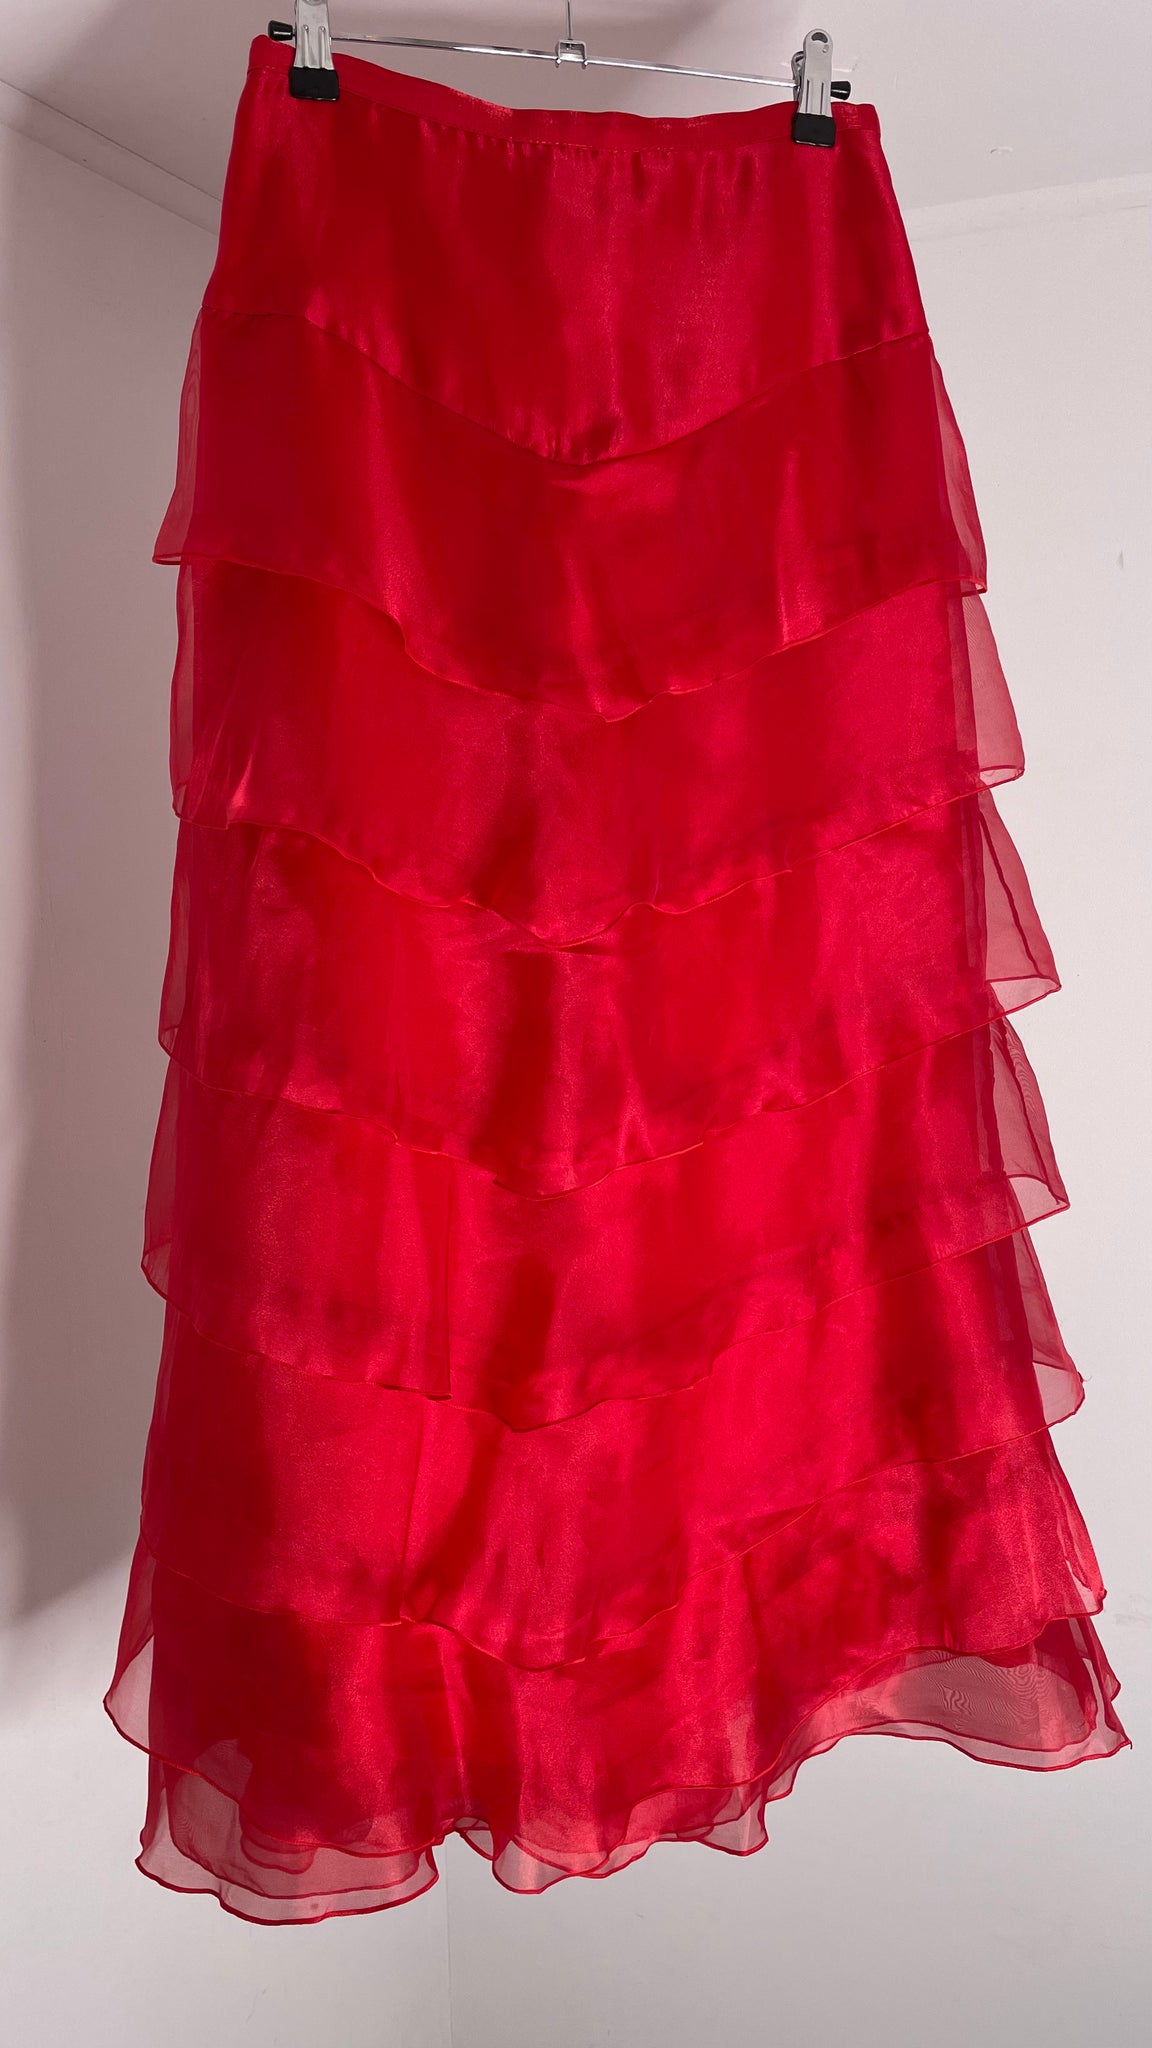 Organza Red Skirt 36/38